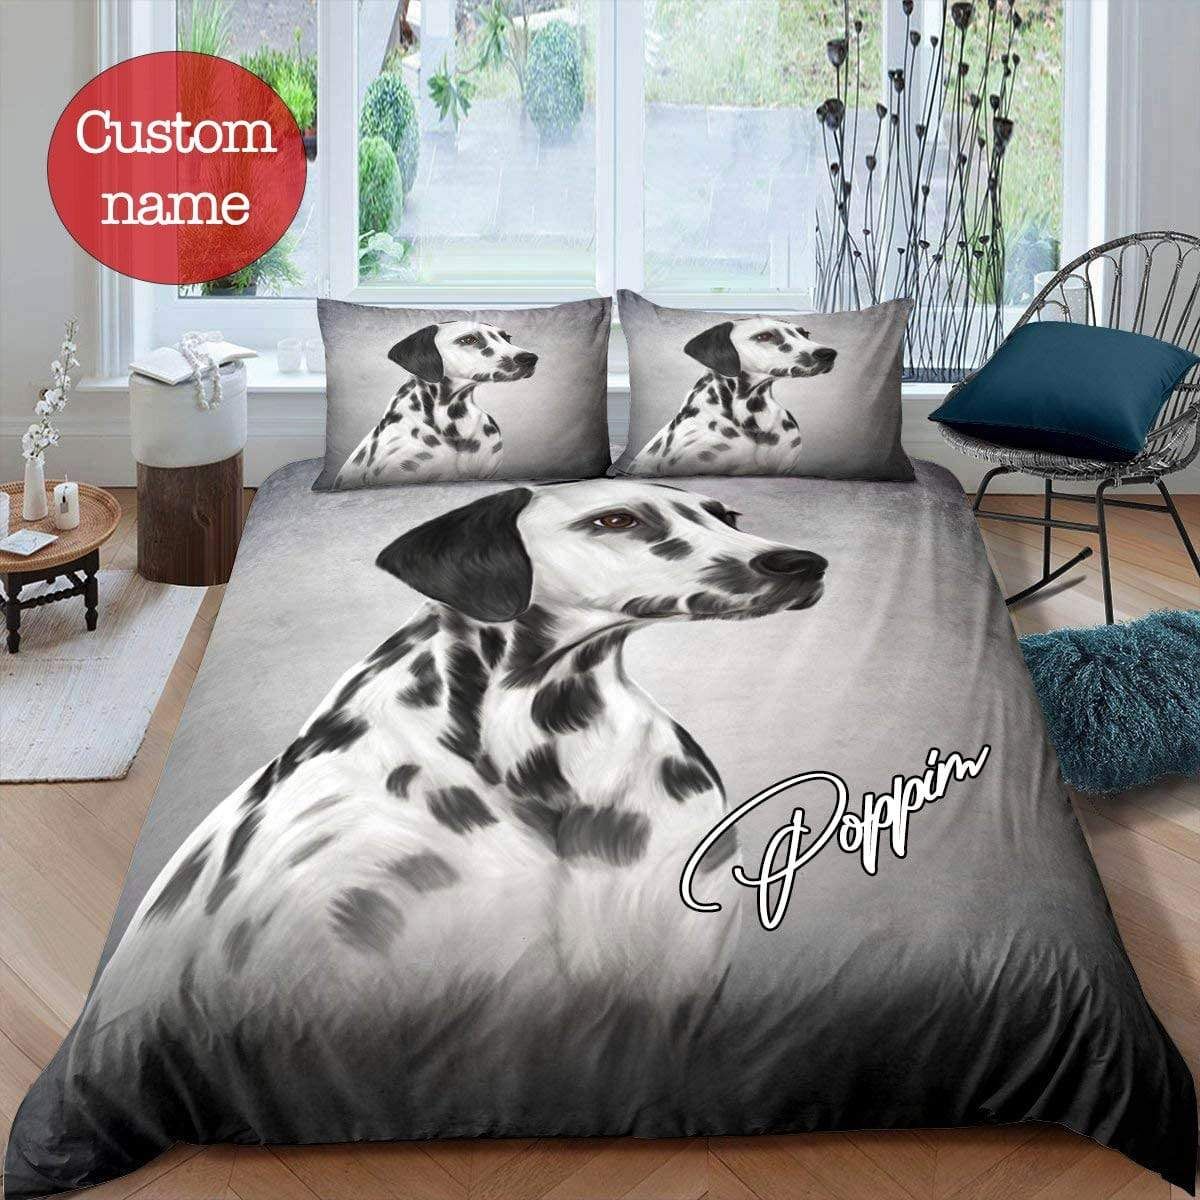 Personalized Puppy Dog Custom Name Bedding Set